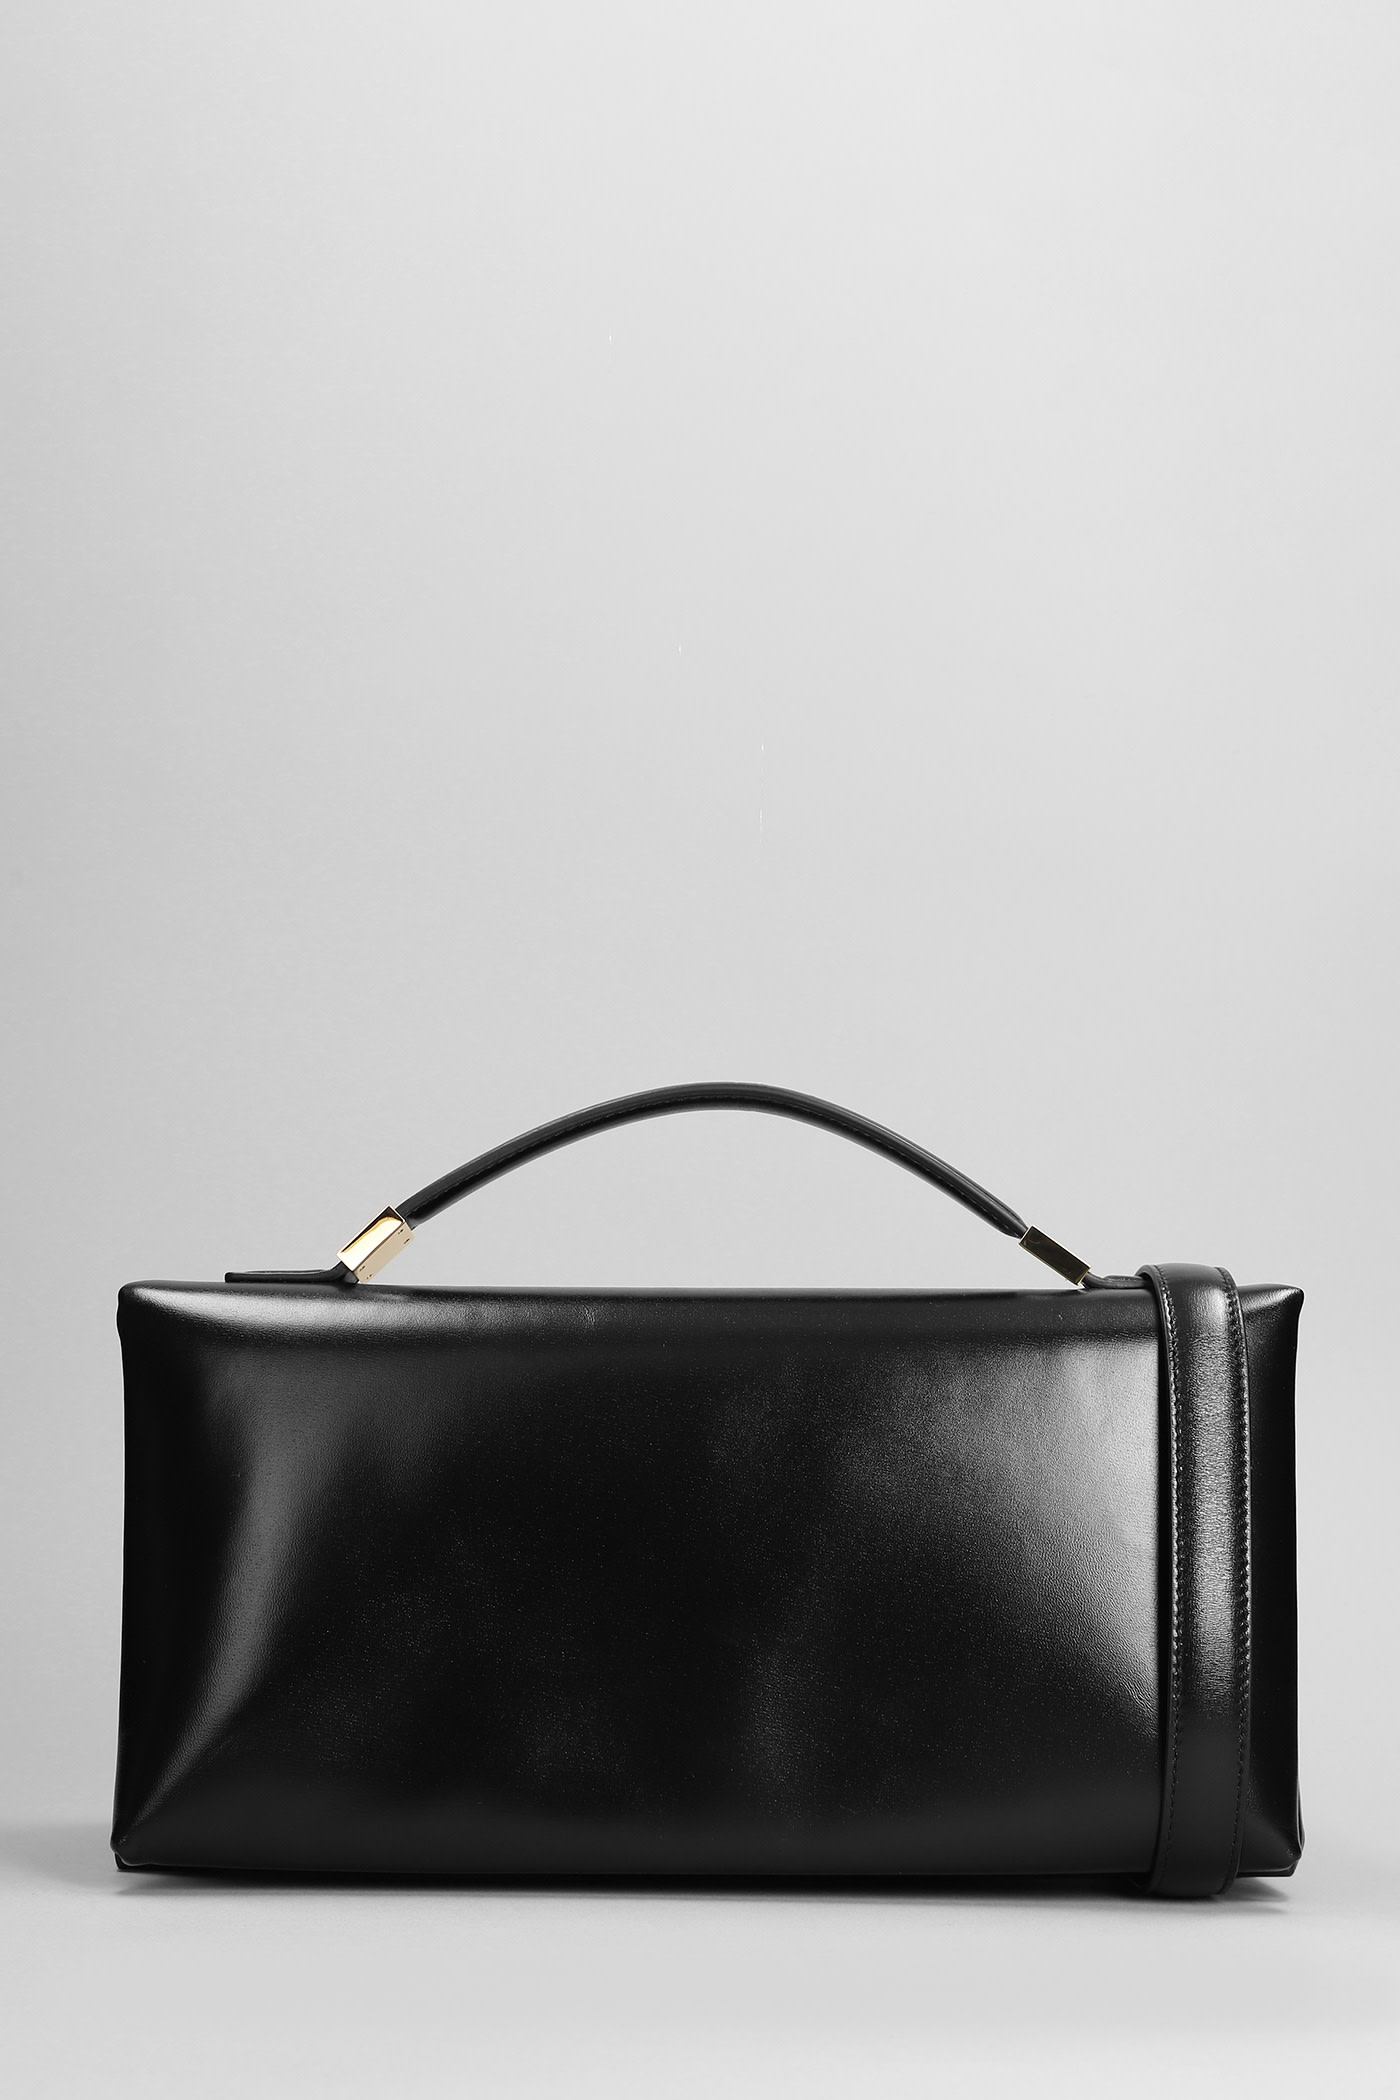 Marni Prisma Hand Bag In Black Leather